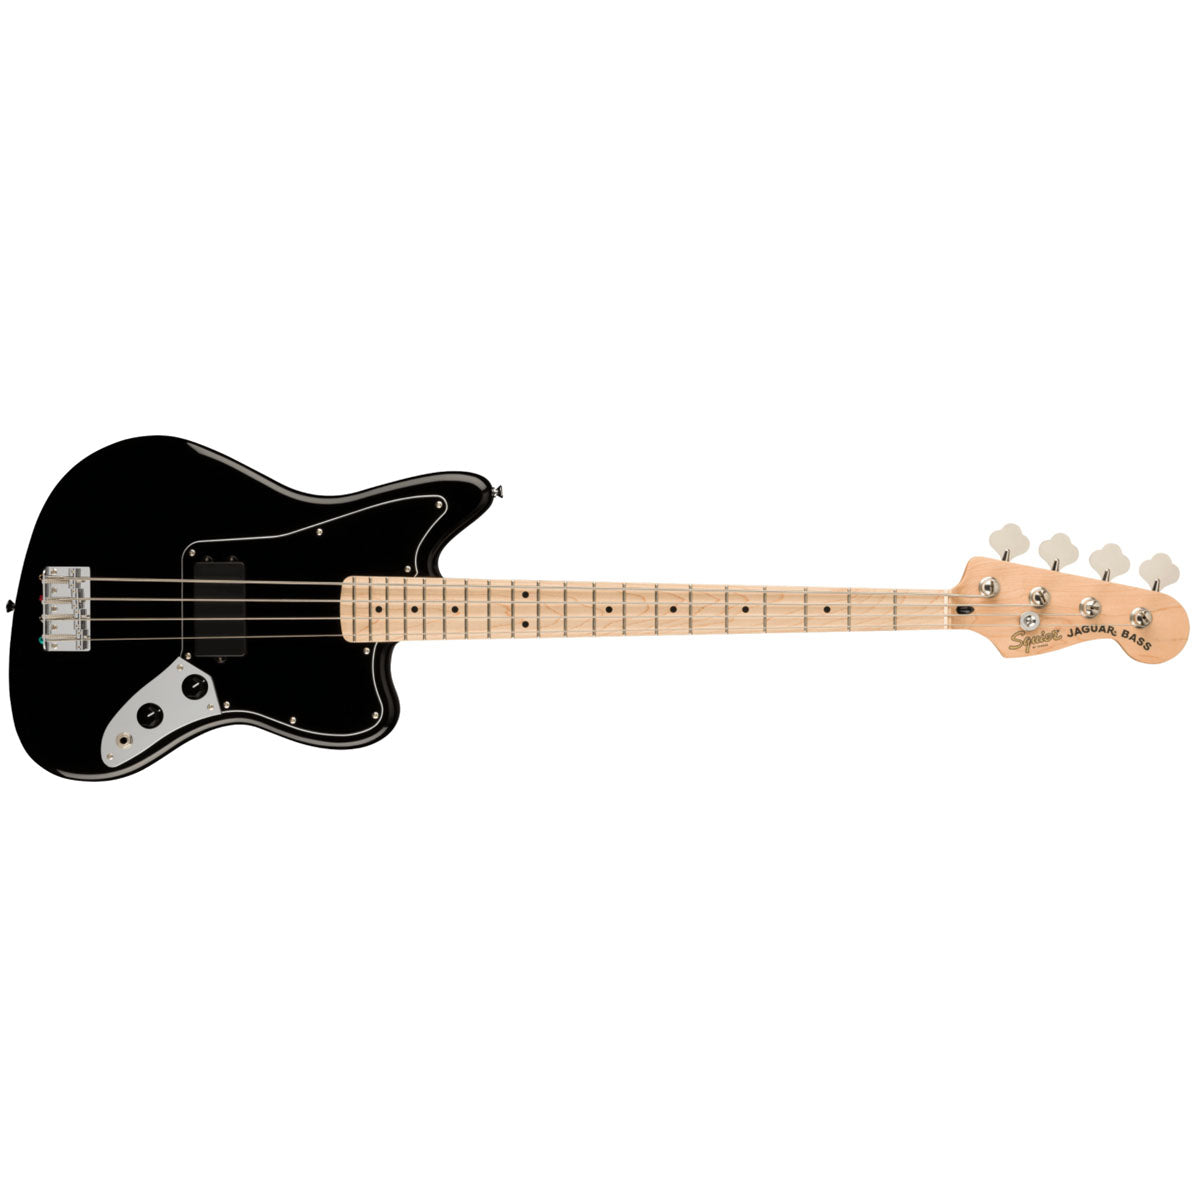 Fender Squier Affinity Series Jaguar H Bass Guitar Black - 0378503506